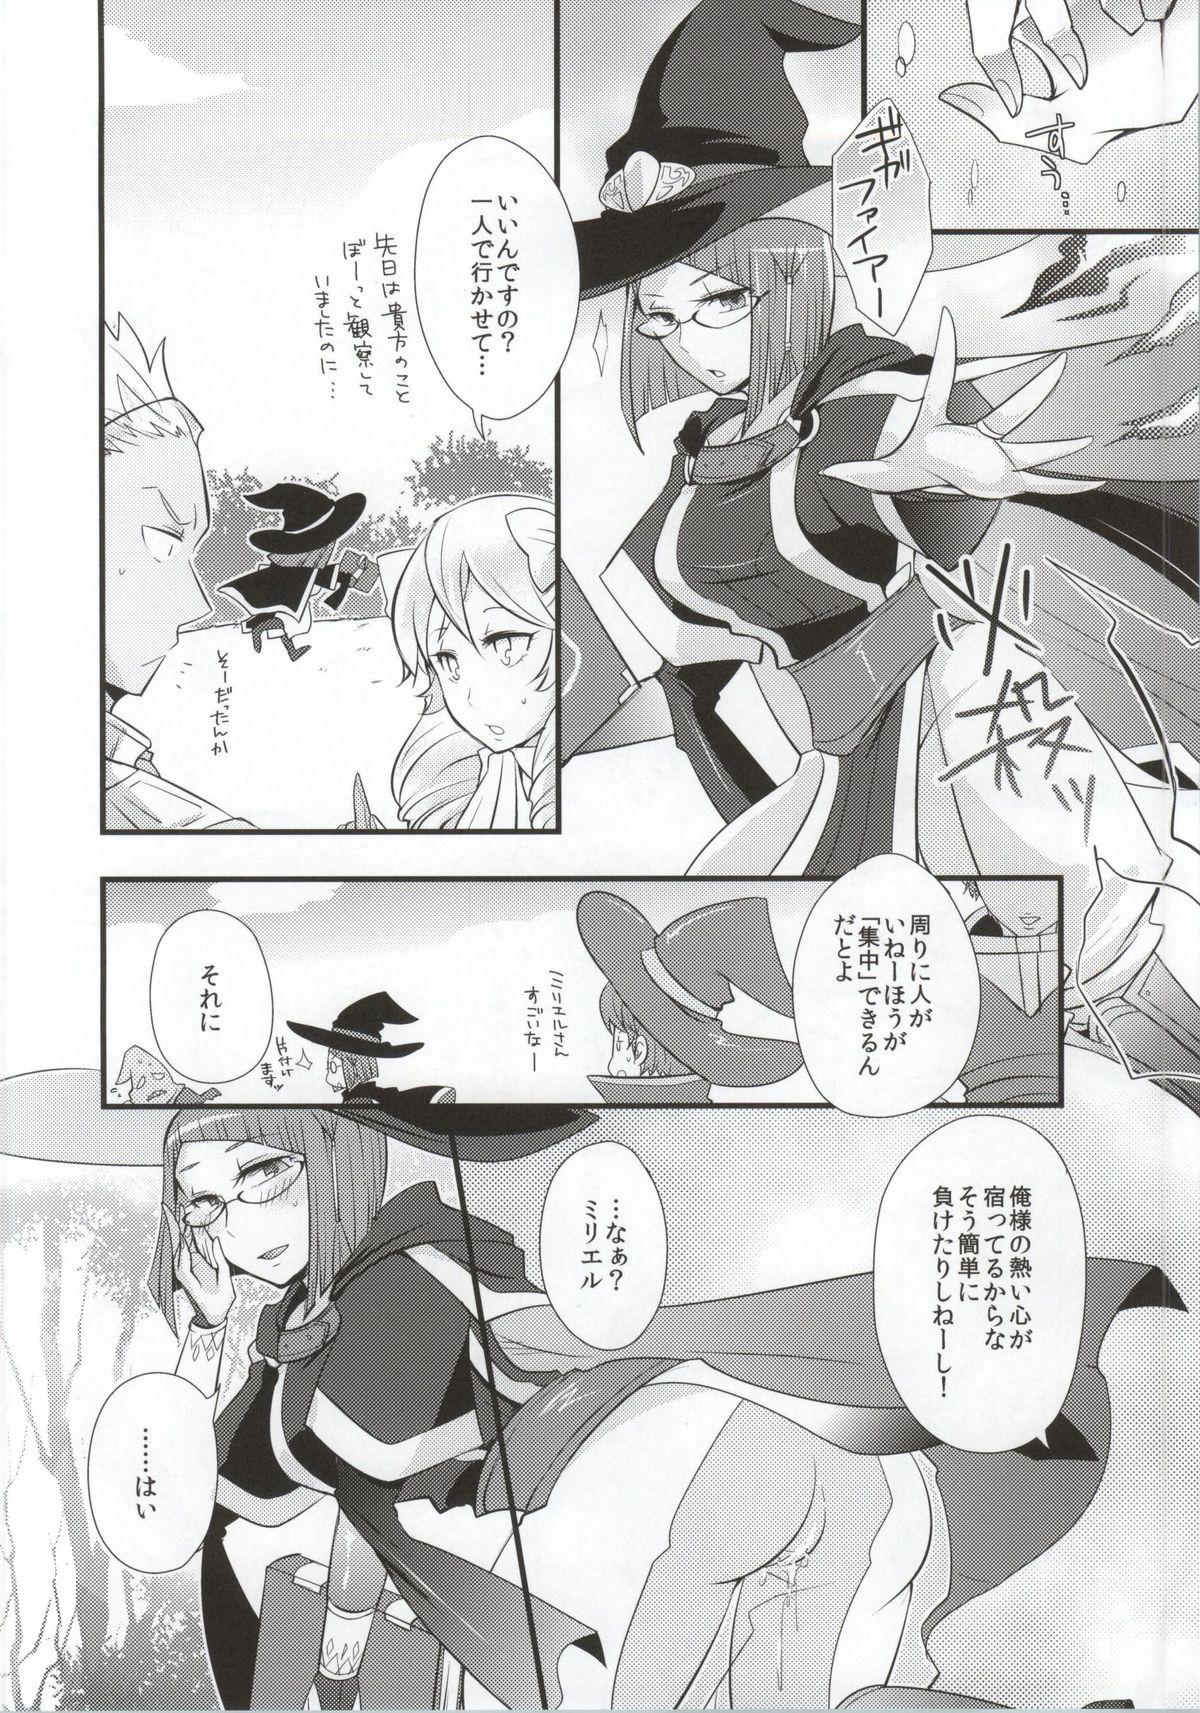 Nylons Atsui Kokoro ni Shuuchuu - Fire emblem awakening Foreskin - Page 20